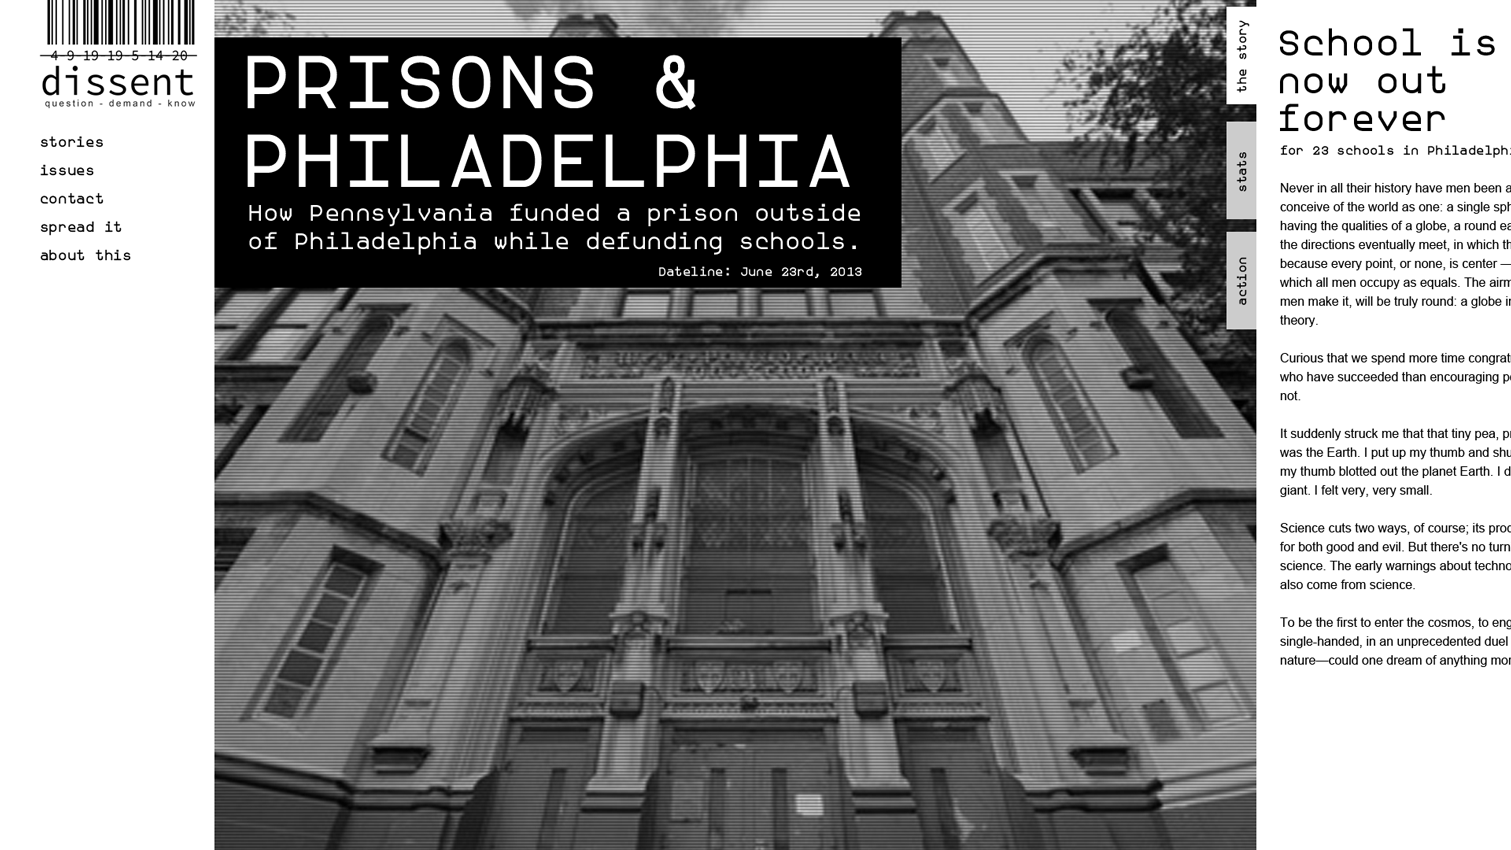 Dissent - Philadelphia Prisons Story